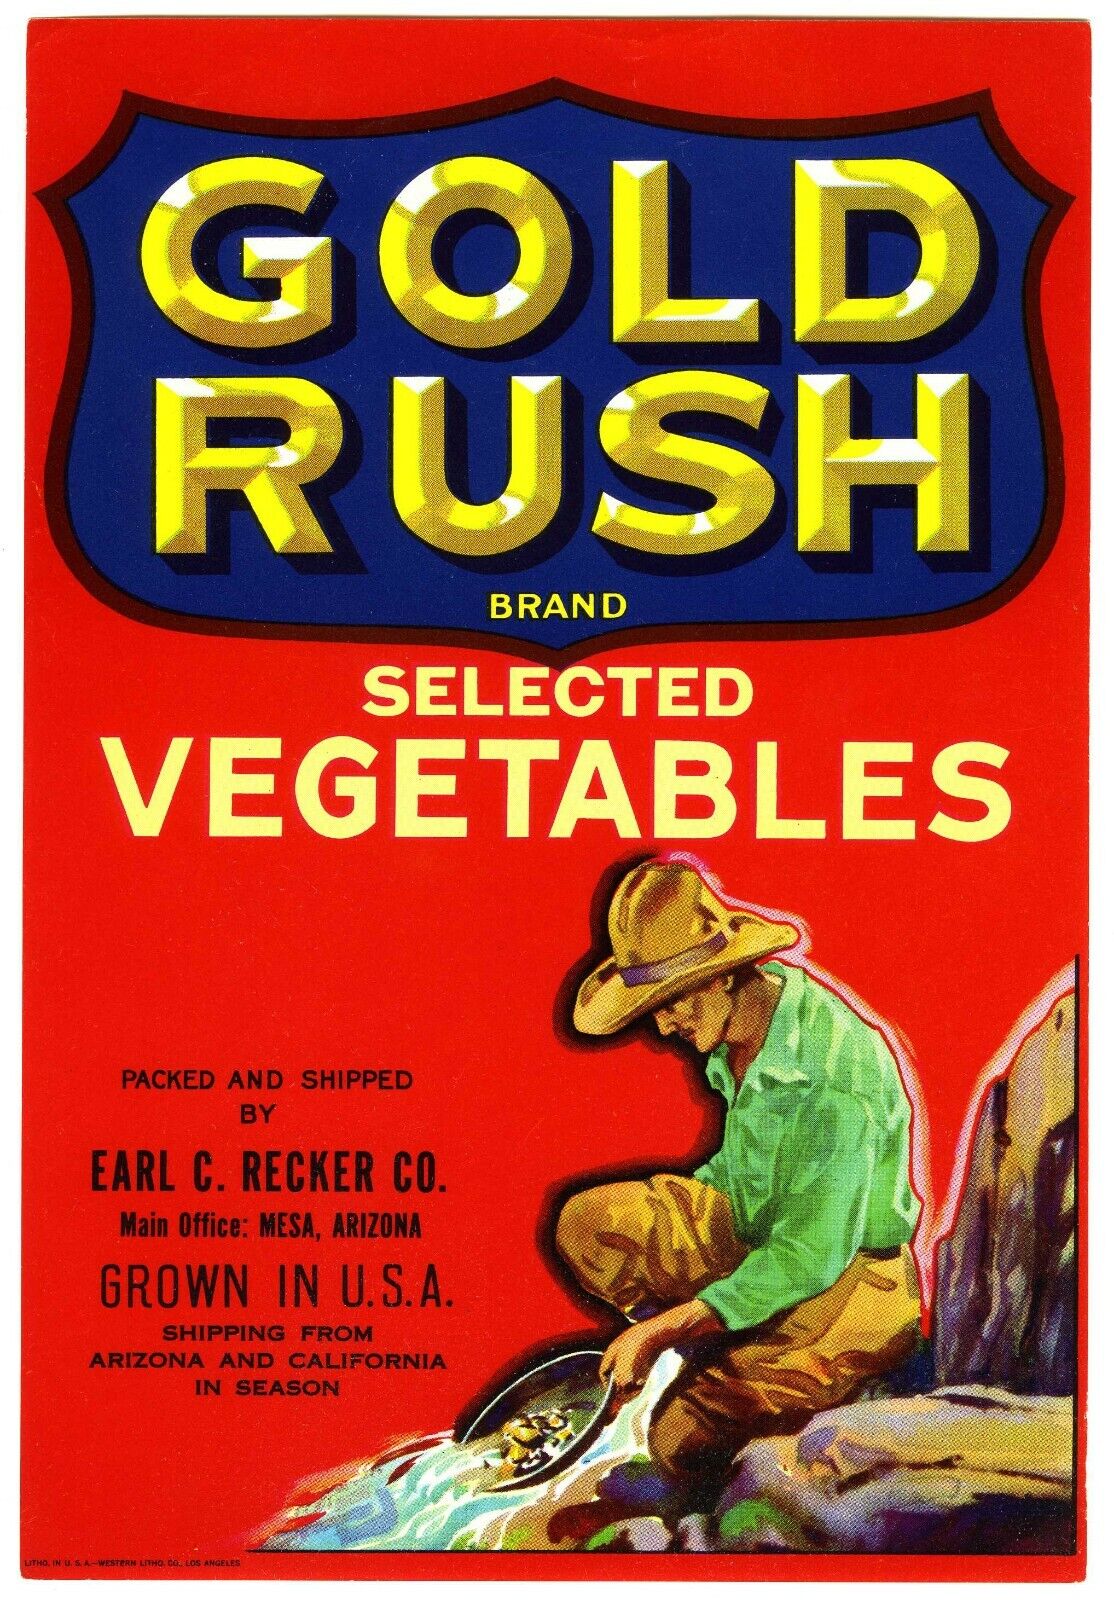 GOLD RUSH (MINER PANNING GOLD) ORIGINAL 1940s MESA ARIZONA VEGETABLE CRATE LABEL